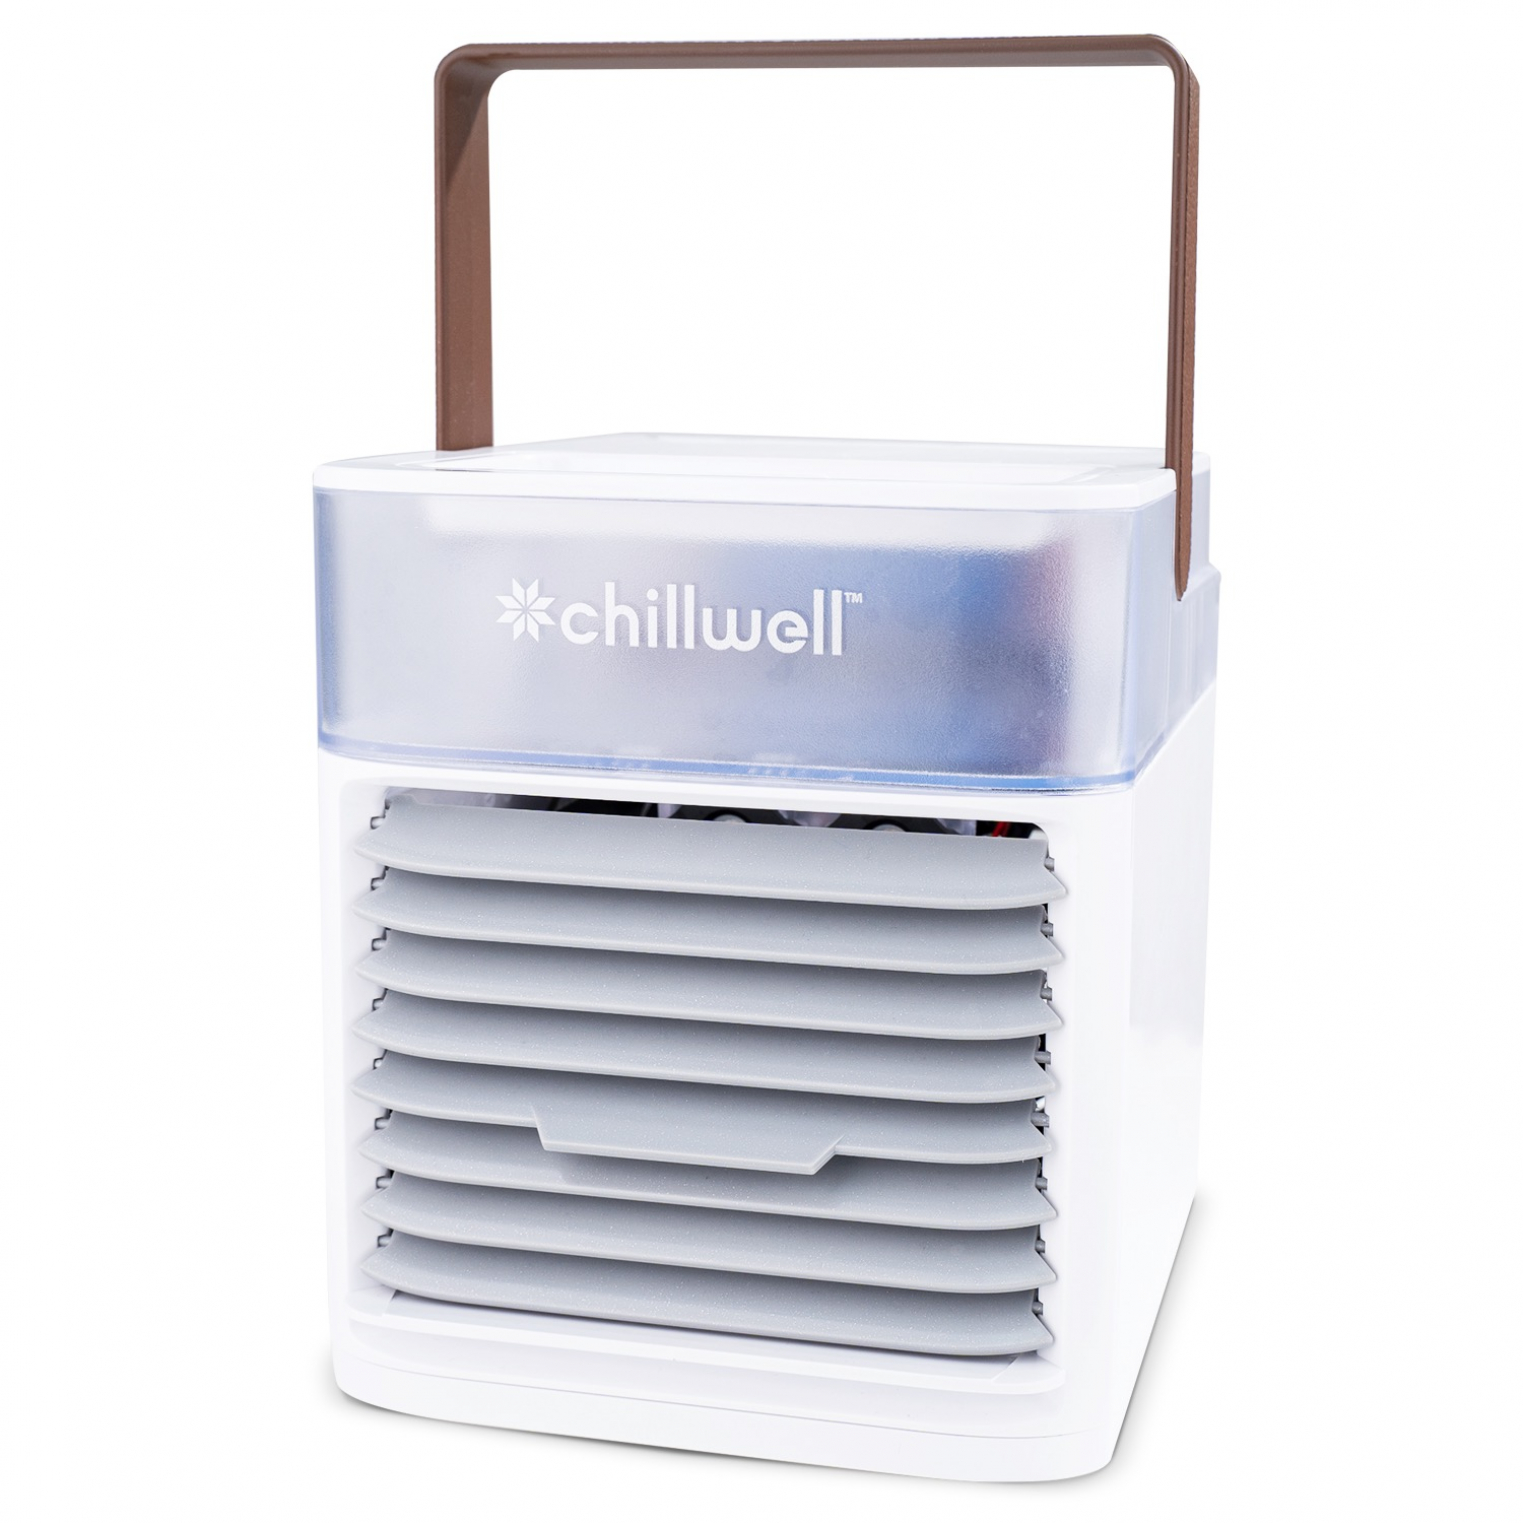 Chillwell AC Air Conditioner Amazon